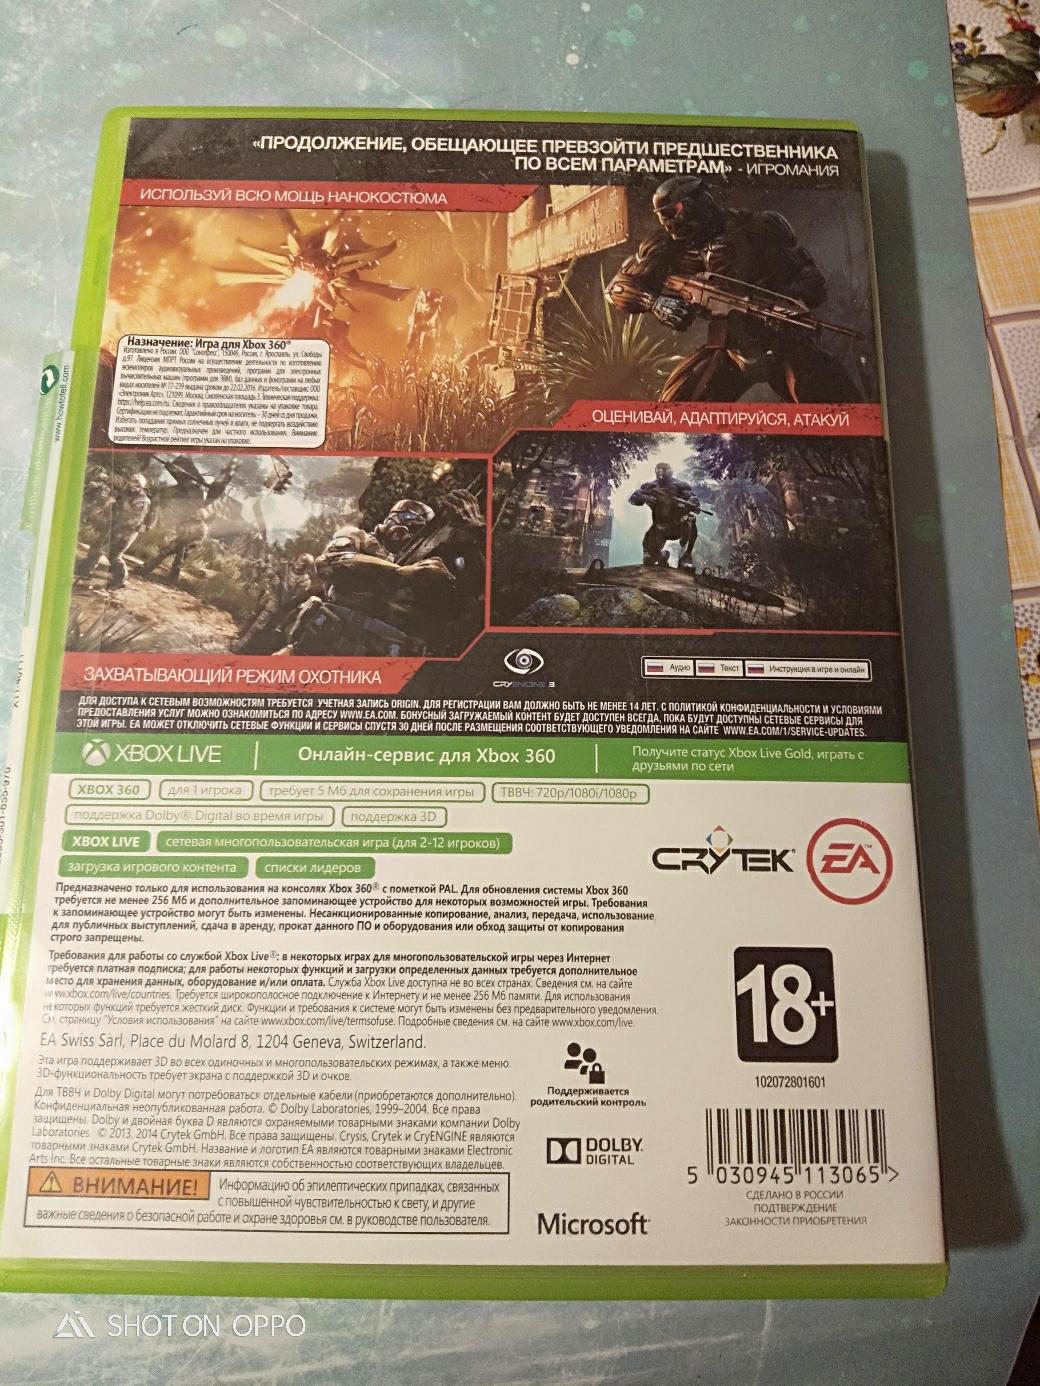 Прошивать ли xbox 360. Lt 3.0 Xbox 360 экран. Прошивка Xbox 360 lt 3.0. Название прошивок Xbox 360.